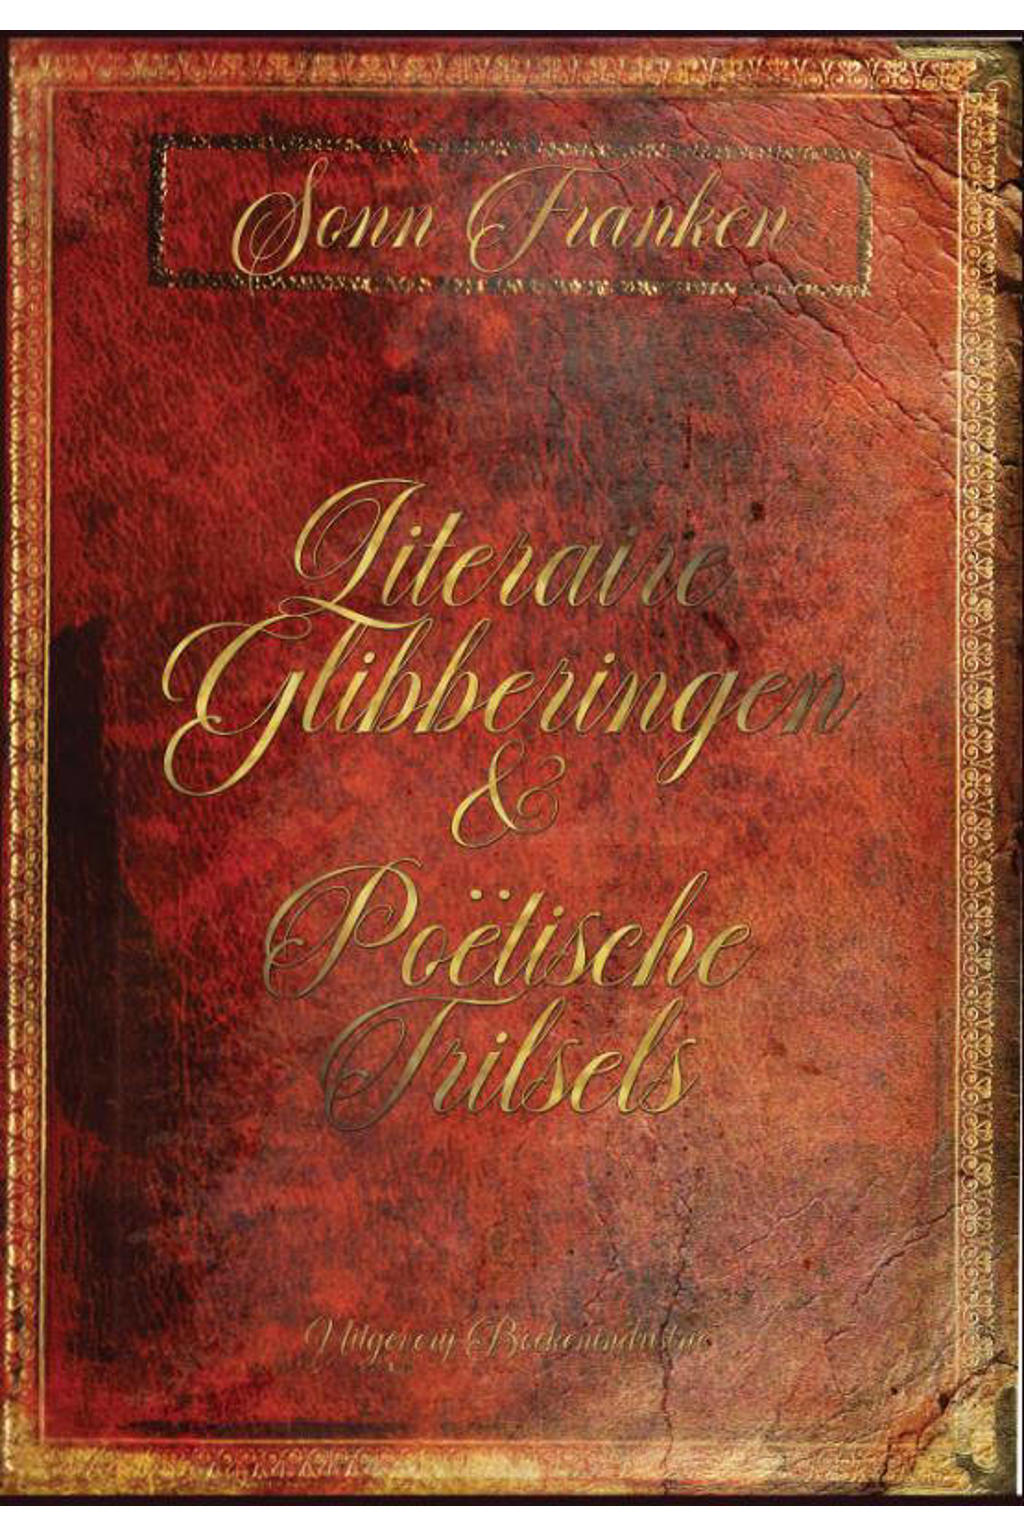 Literaire Glibberingen & Poëtische Trilsels - Sonn Franken